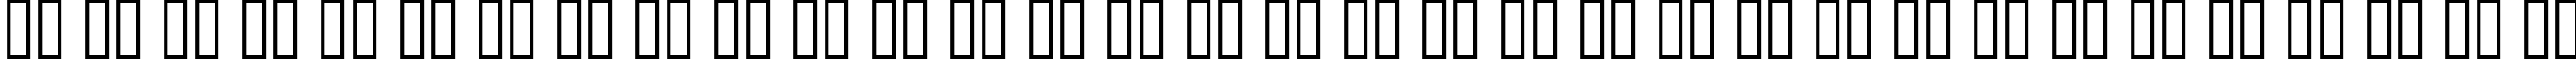 Пример написания русского алфавита шрифтом Bedini